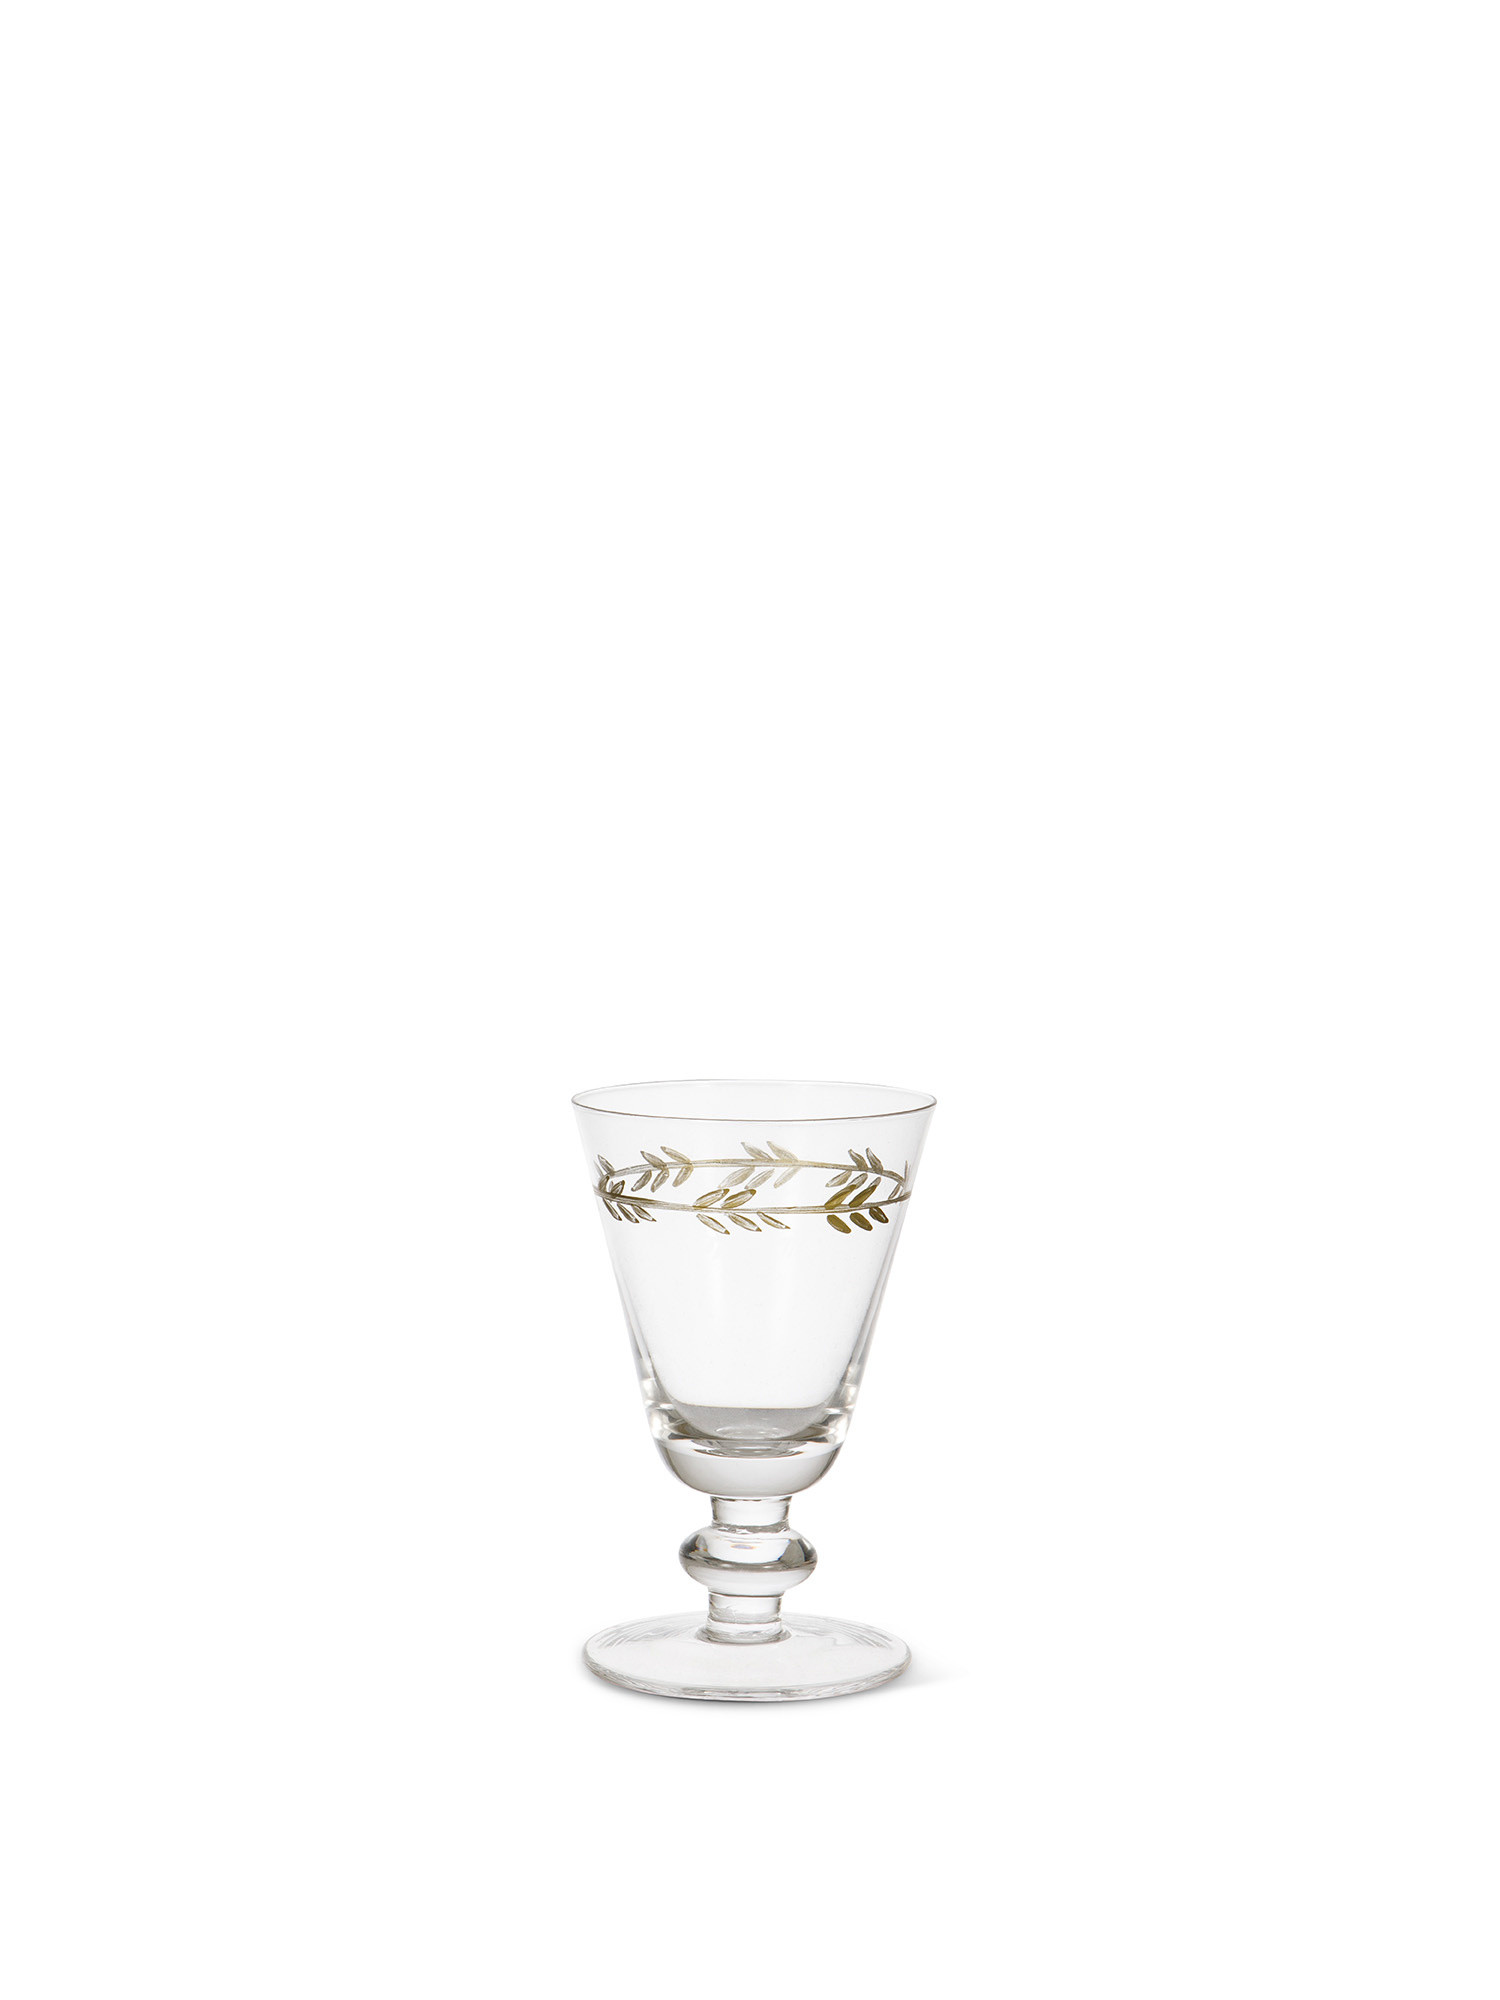 Glass goblet with leaves decoration, Transparent, large image number 0